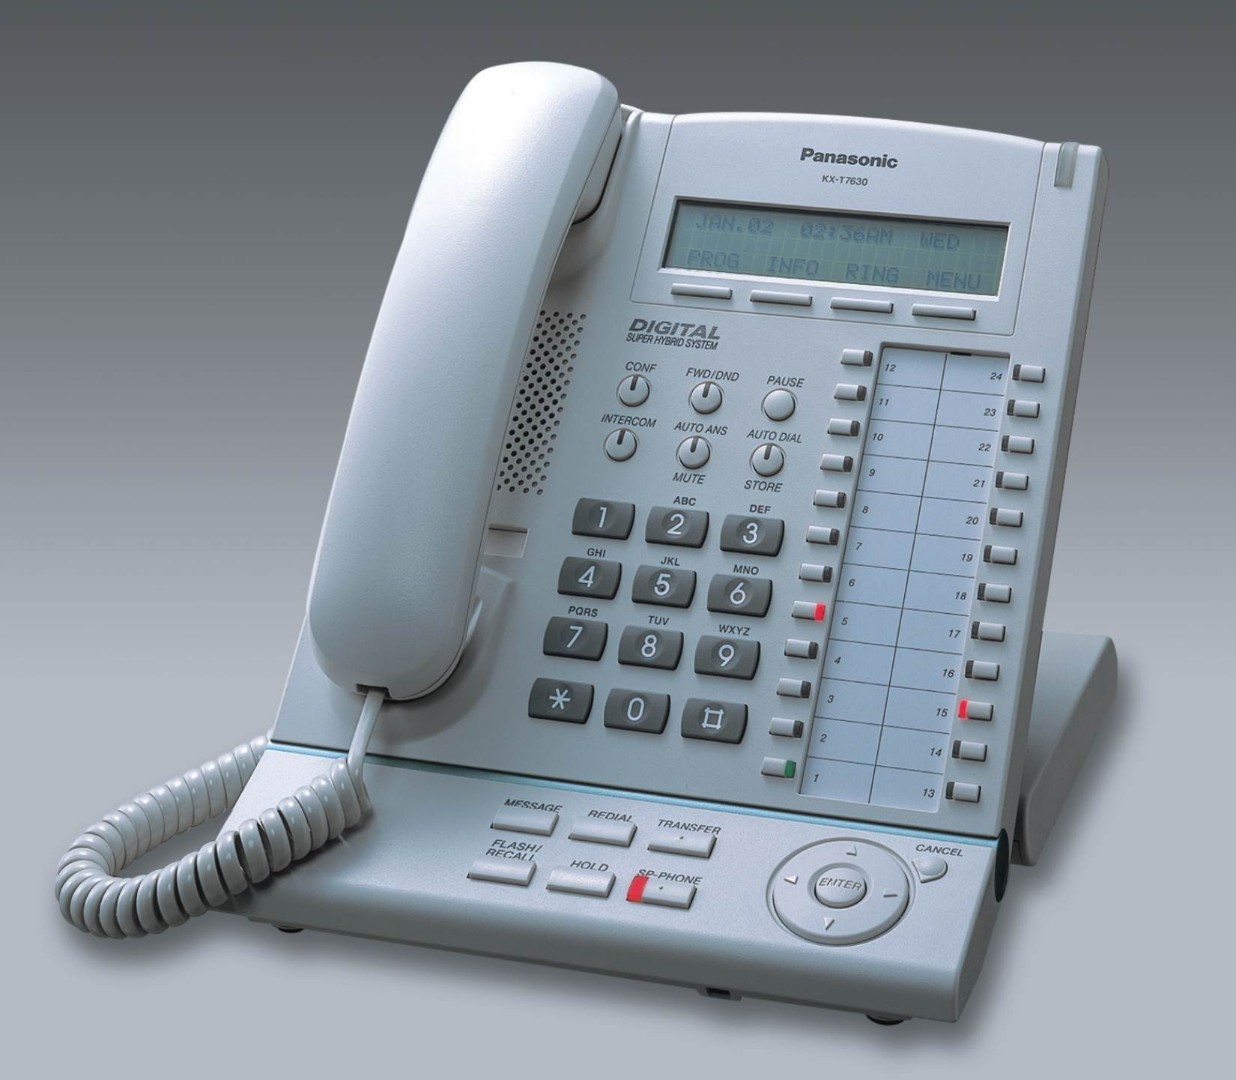 Цифровой системный телефон Panasonic KX-T7630RU-W / KX-T7630RU-B